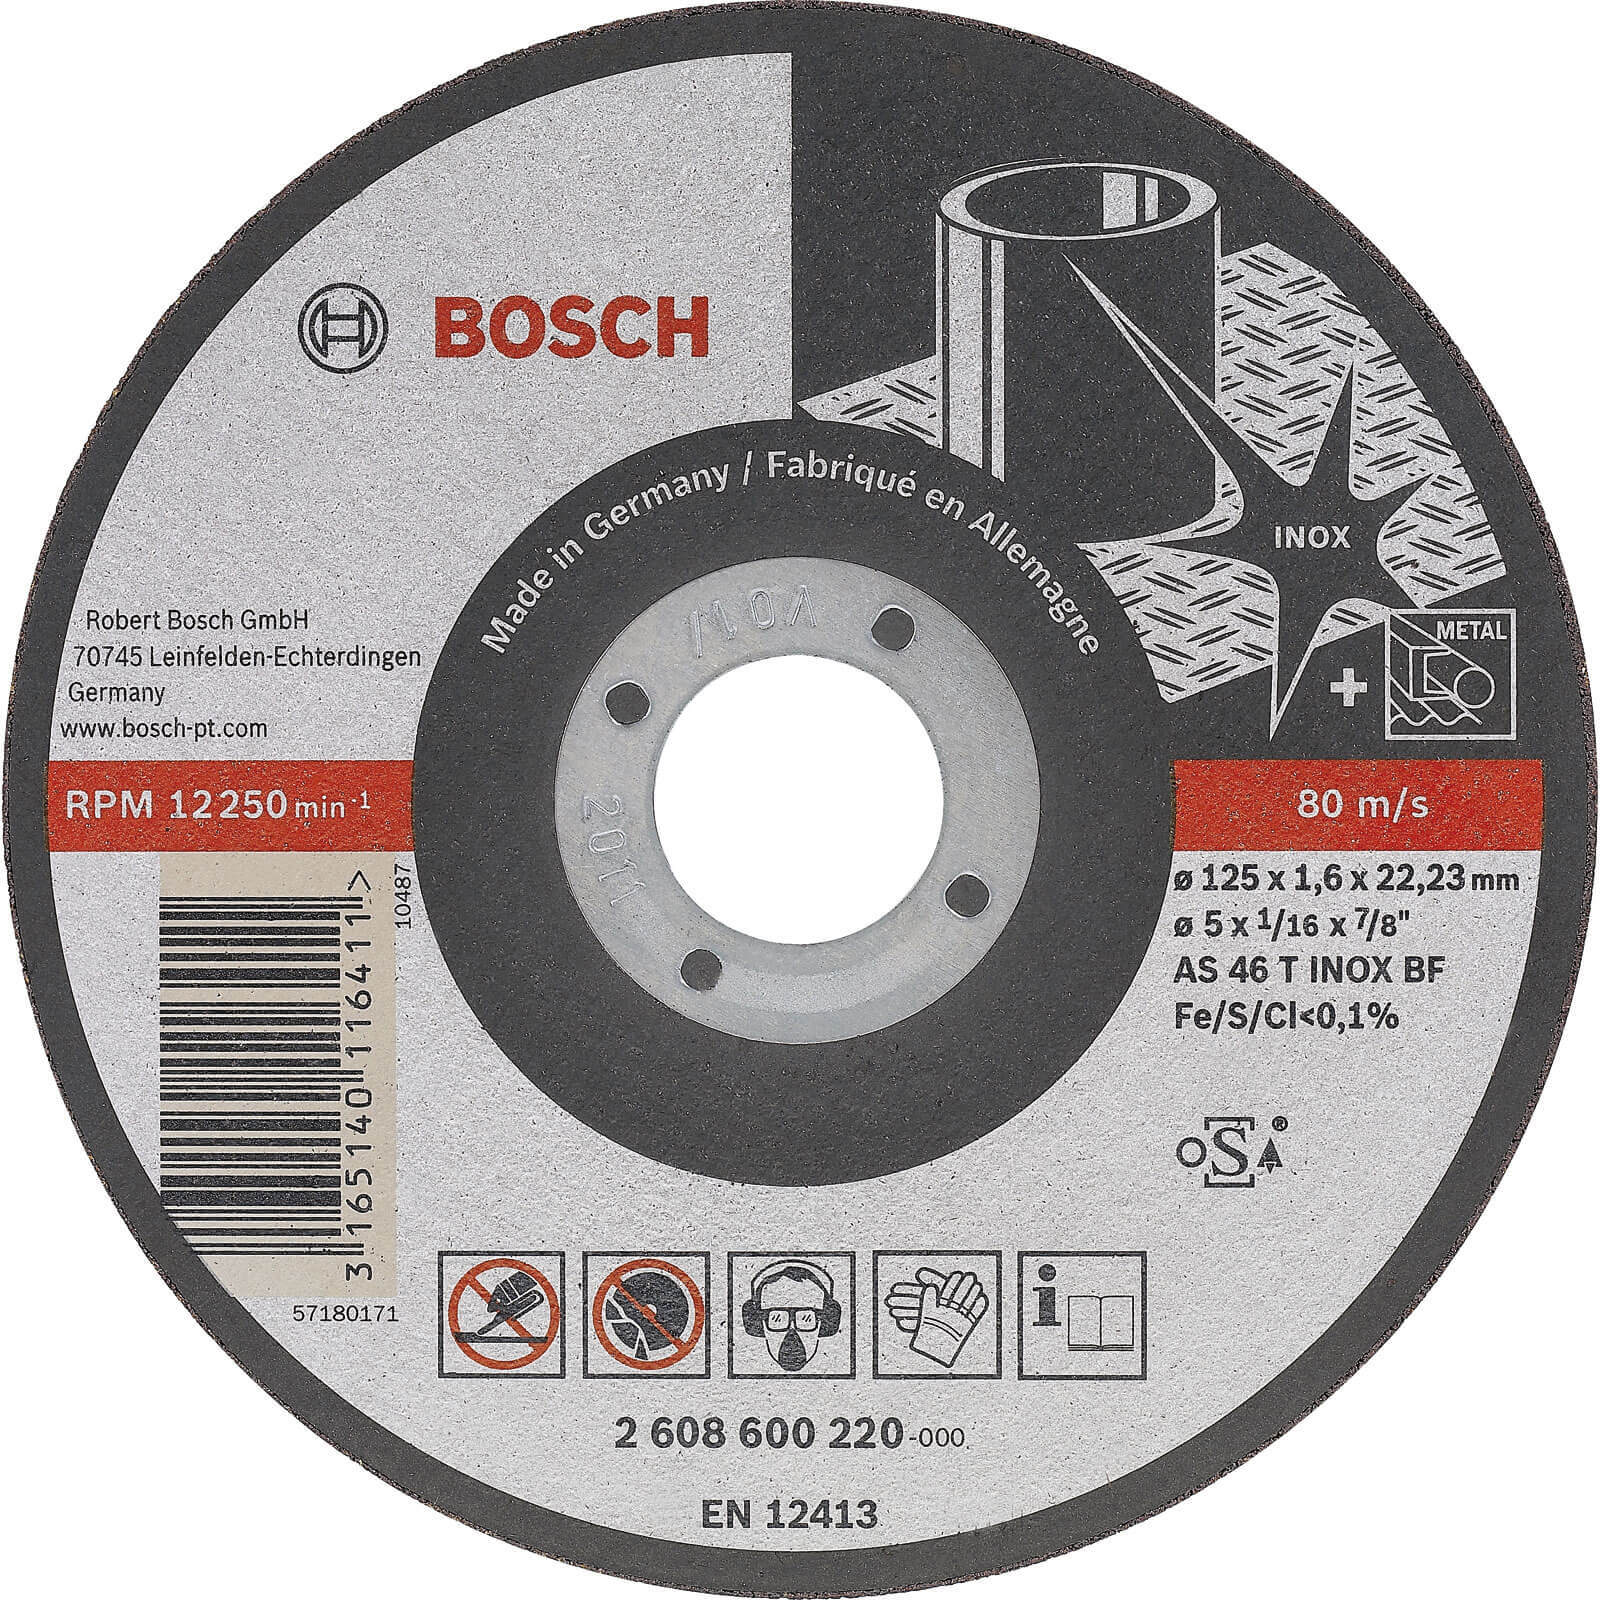 Photo of Bosch Rapido Best Inox Cutting Disc 115mm 1mm 22mm